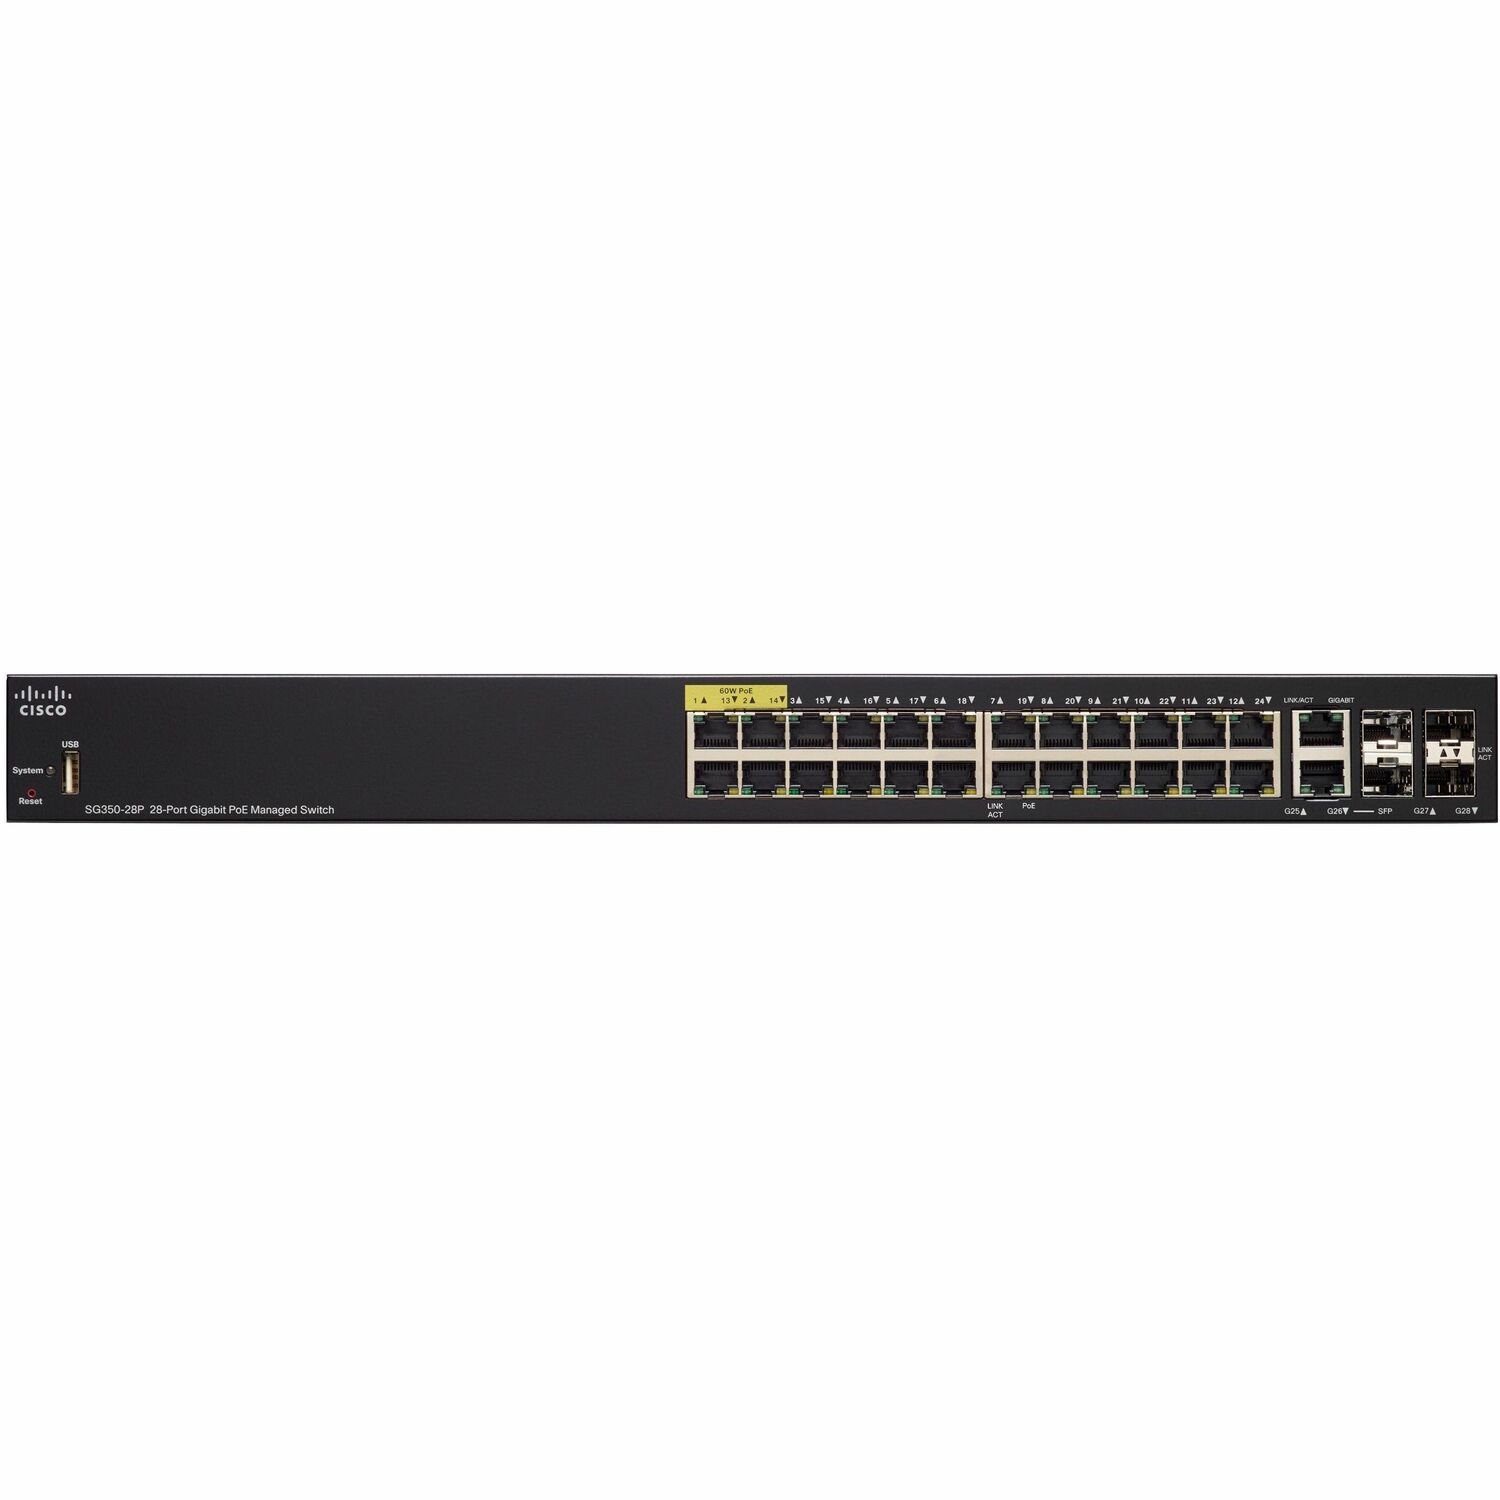 Cisco SG350-28P Ethernet Switch